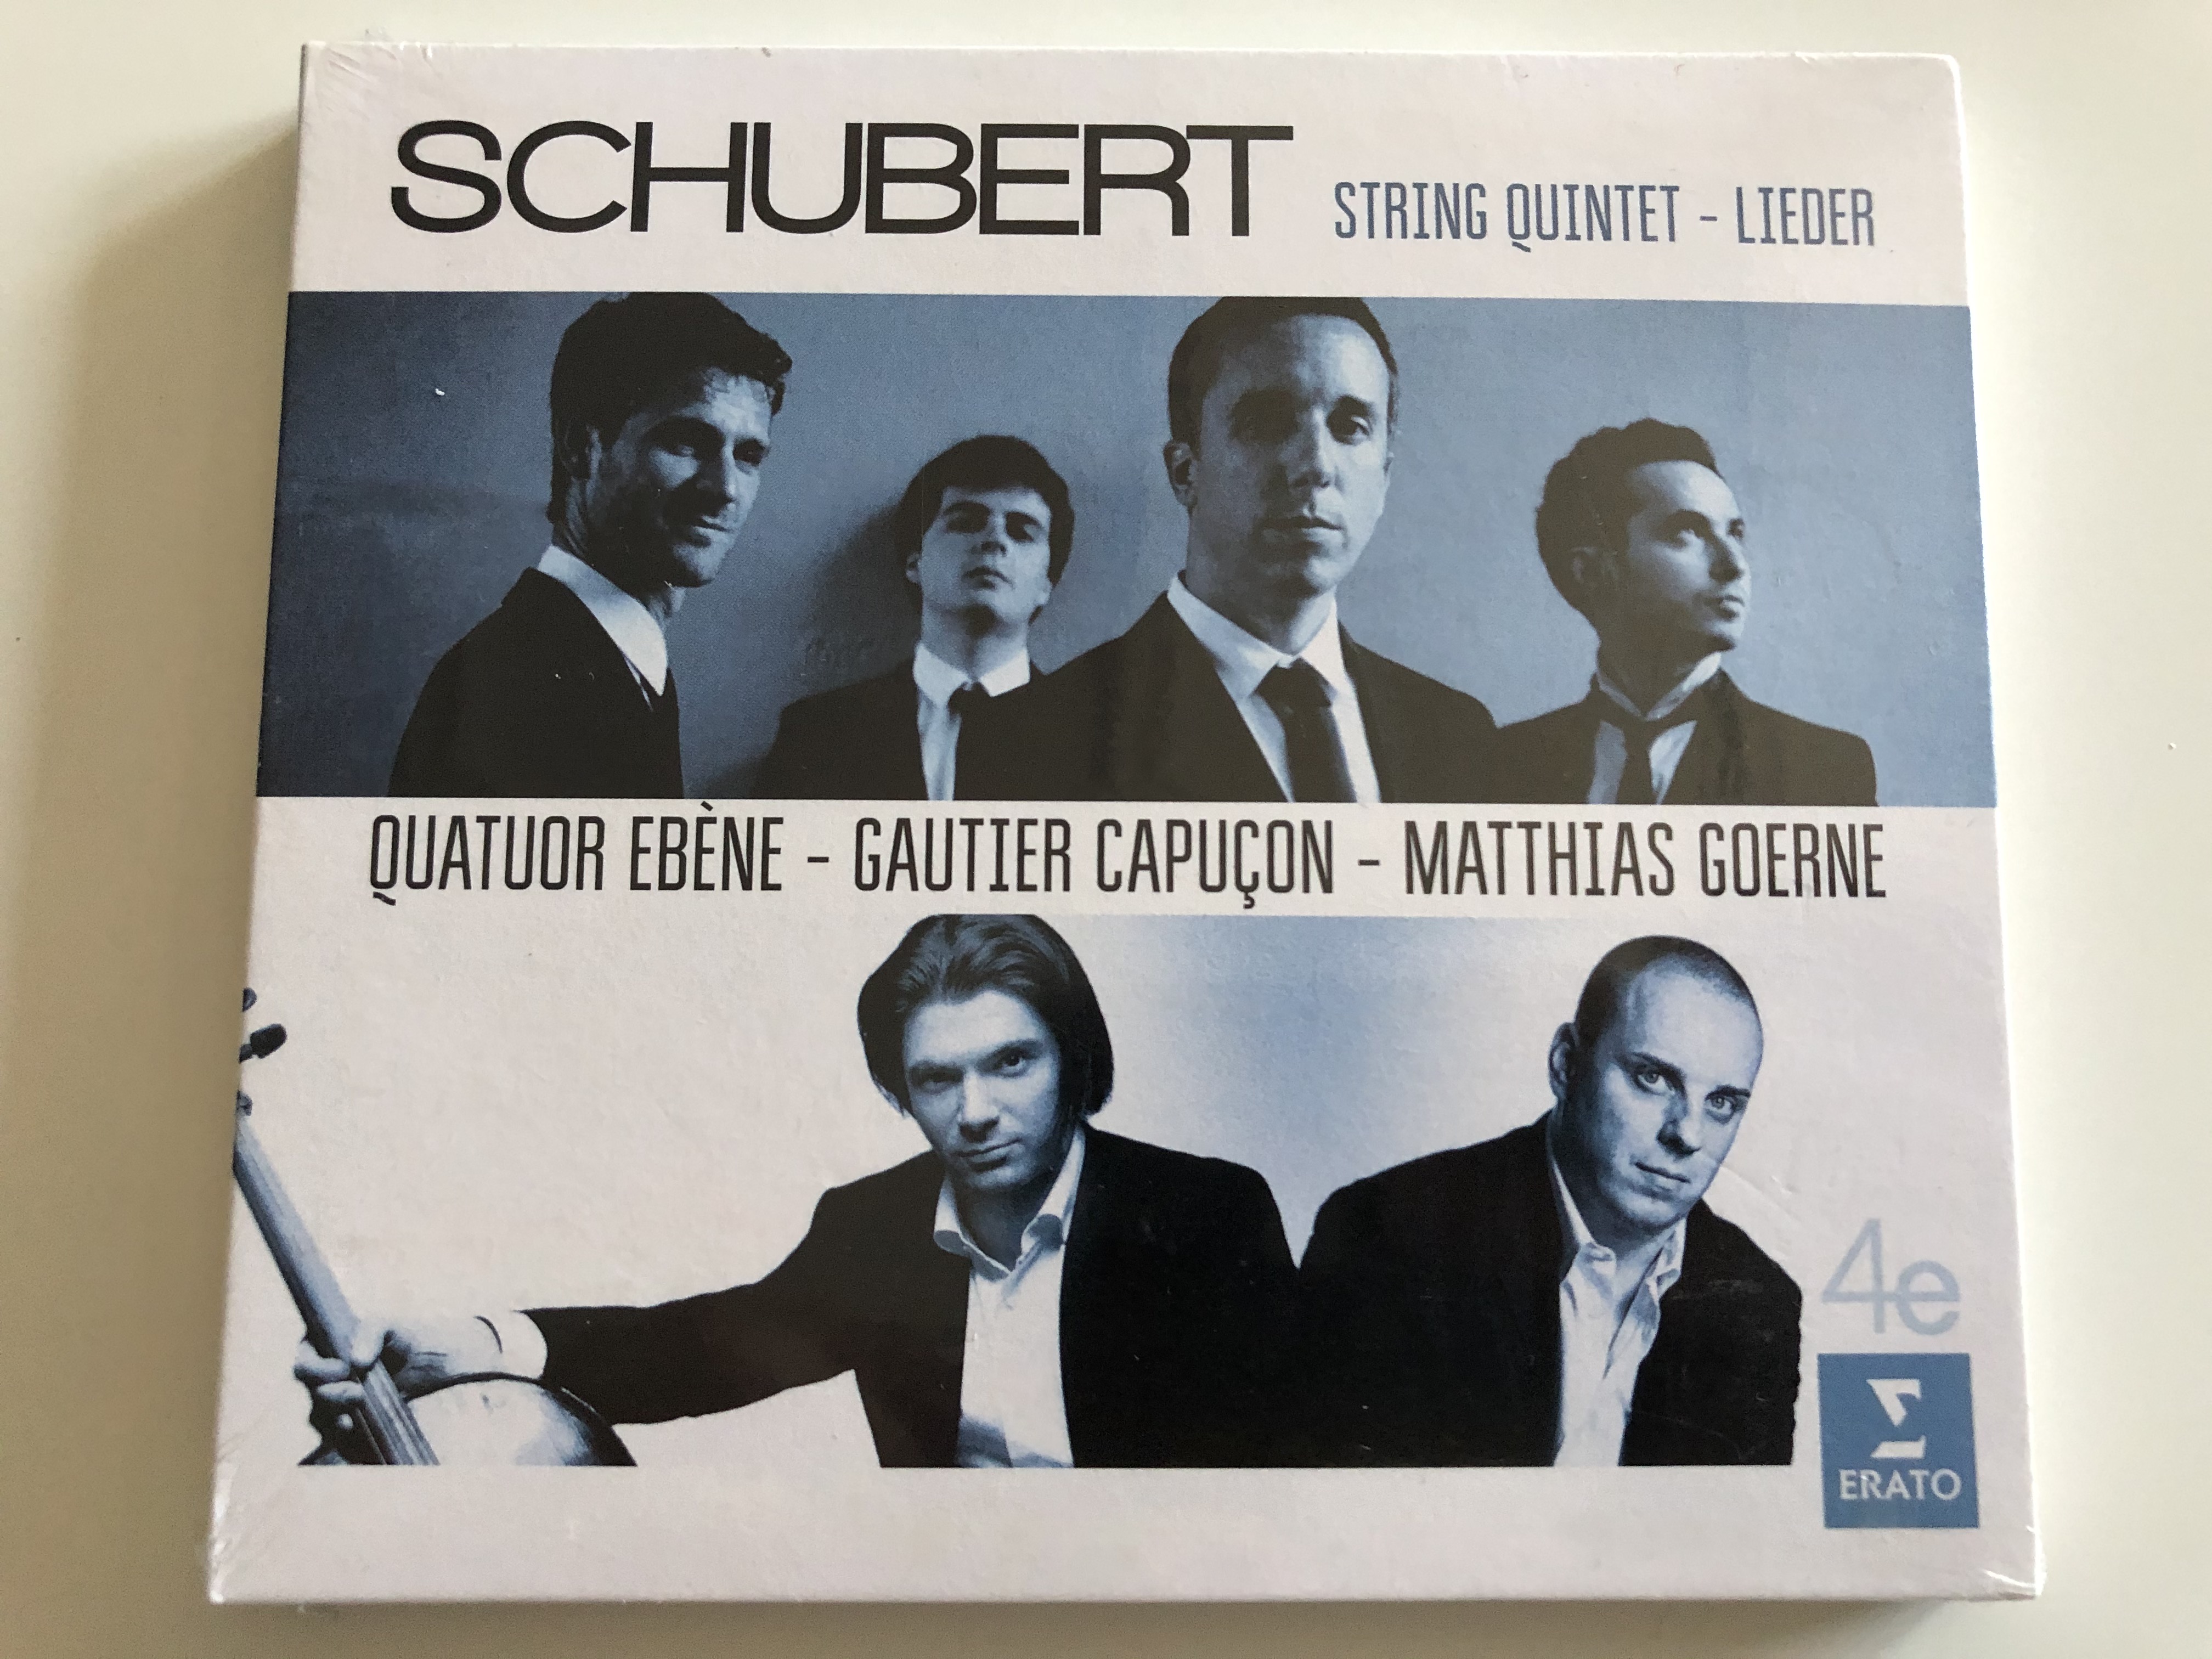 schubert-string-quintet-lieder-quatuor-eb-ne-gautier-capu-on-matthias-goerne-warner-classics-audio-cd-2016-0825646487615-1-.jpg